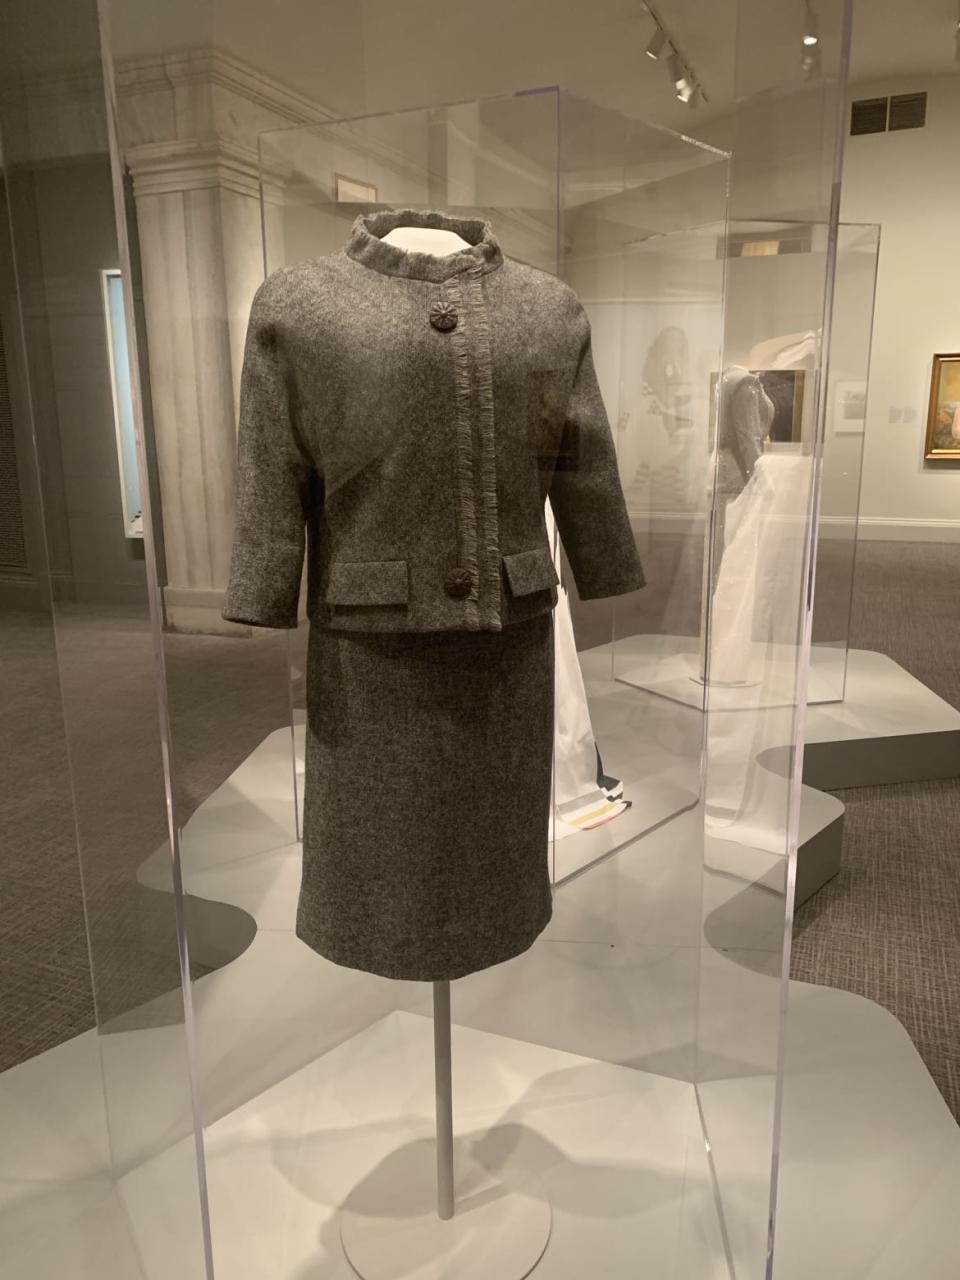 <div class="inline-image__caption"><p>Jackie Kennedy’s gray suit by Chez Ninon, 1961. </p></div> <div class="inline-image__credit">Smithsonian’s National Portrait Gallery</div>